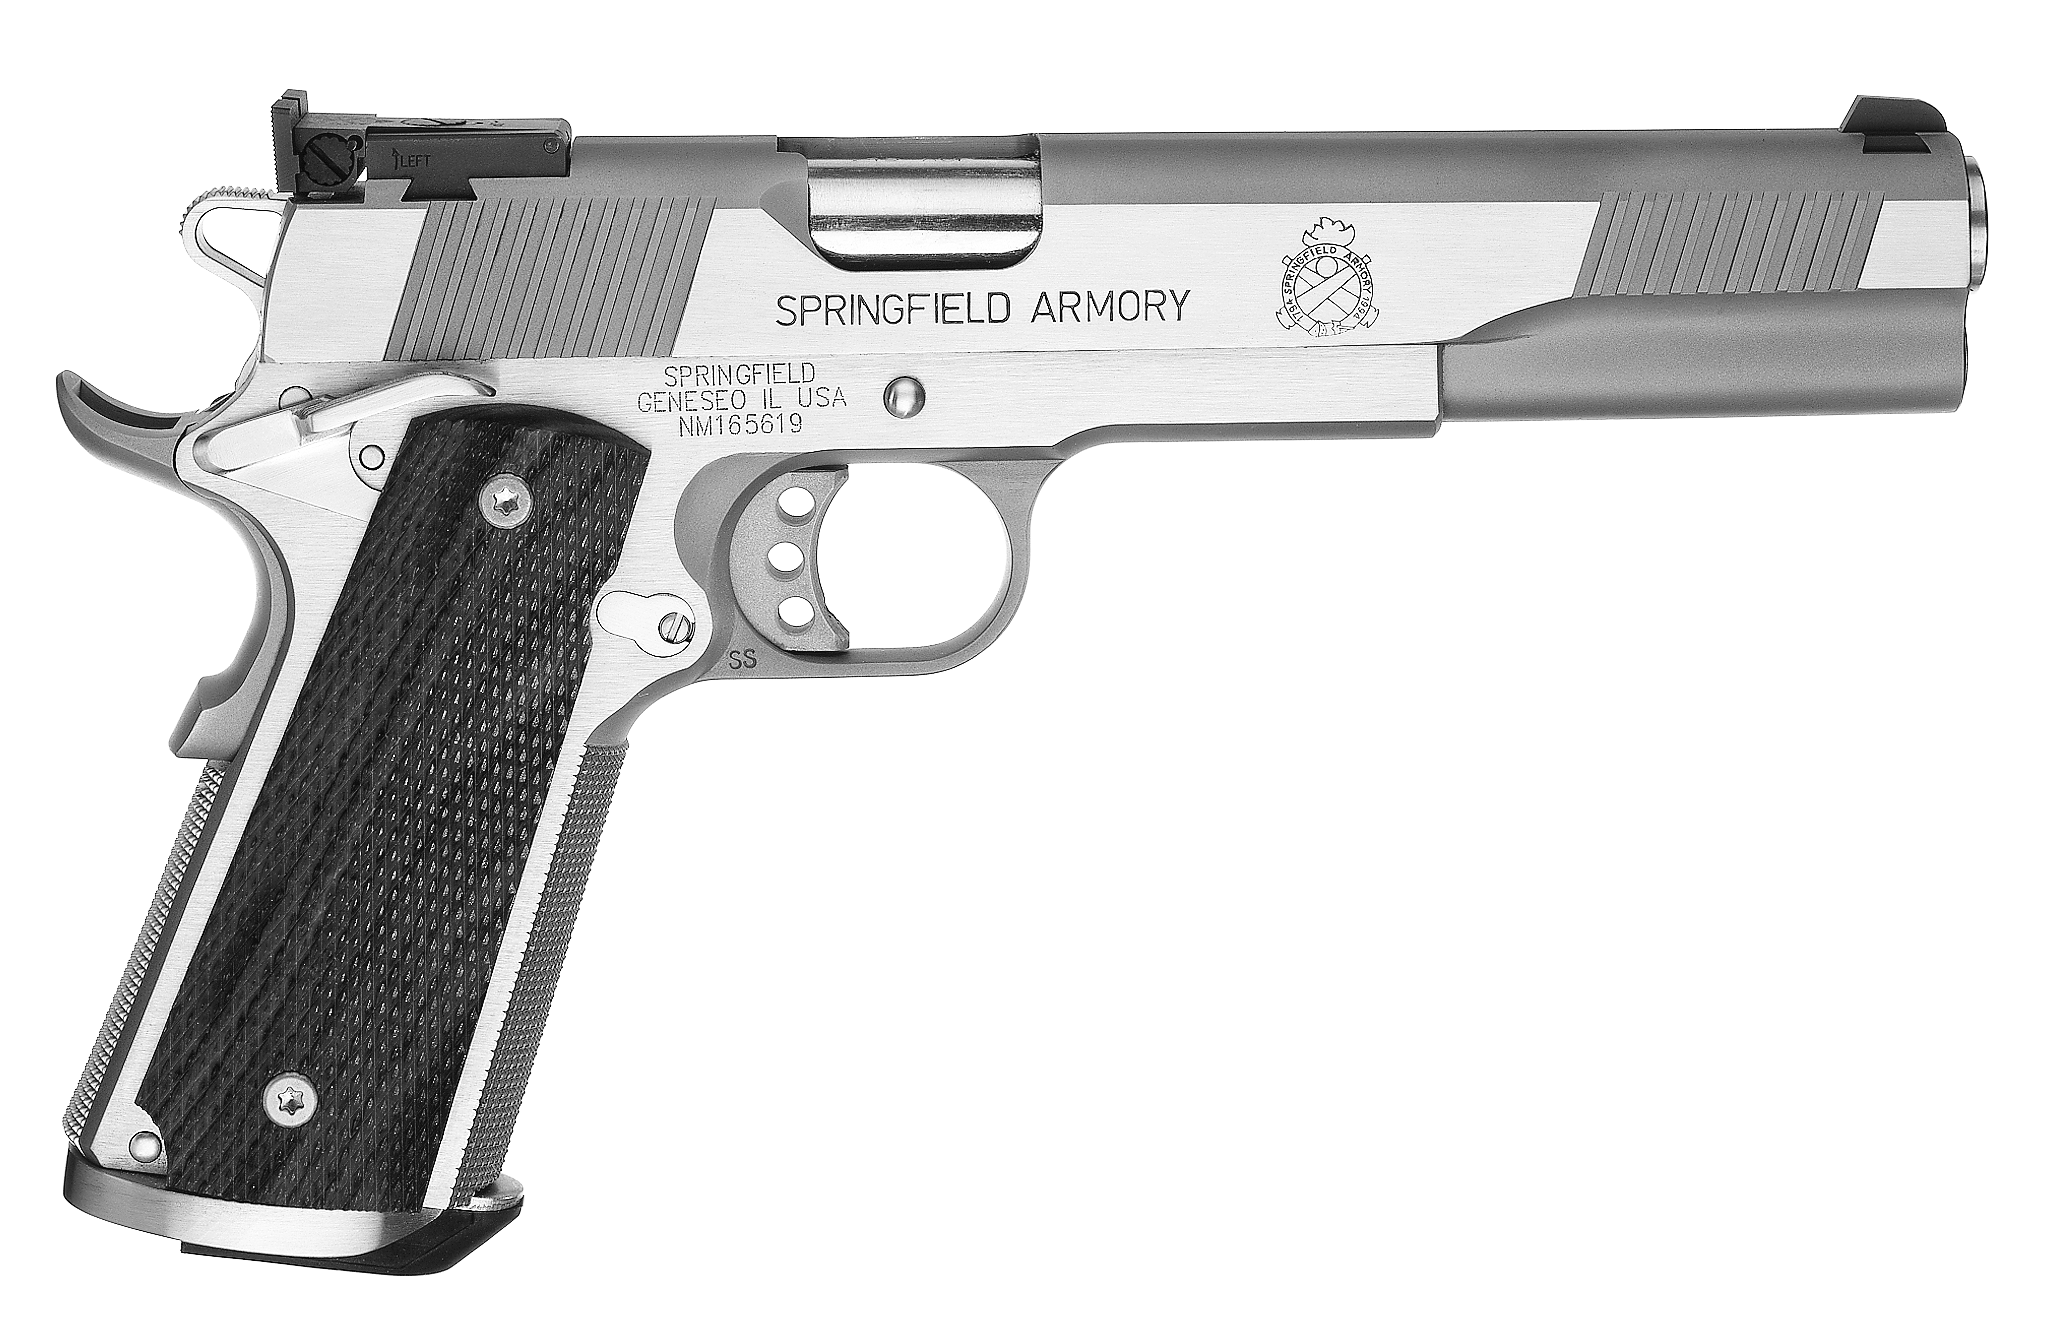 Springfield Armory Inc Model 1911 A1 Long Slide Gun Values By Gun Digest 1776